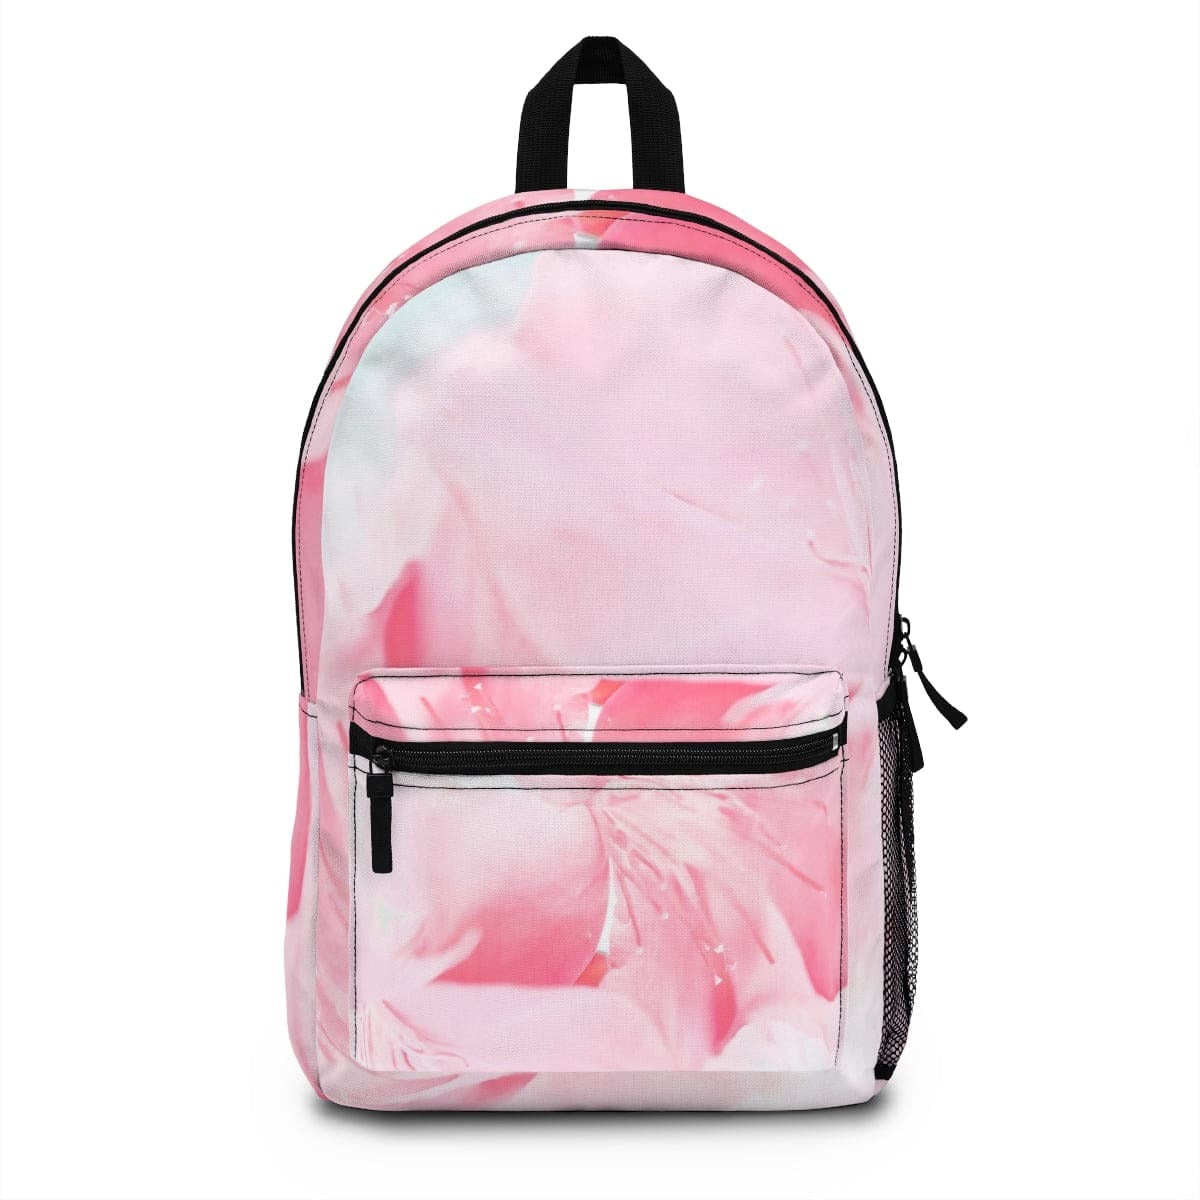 Backpack - Large Water-resistant Bag, Pink Flower Bloom